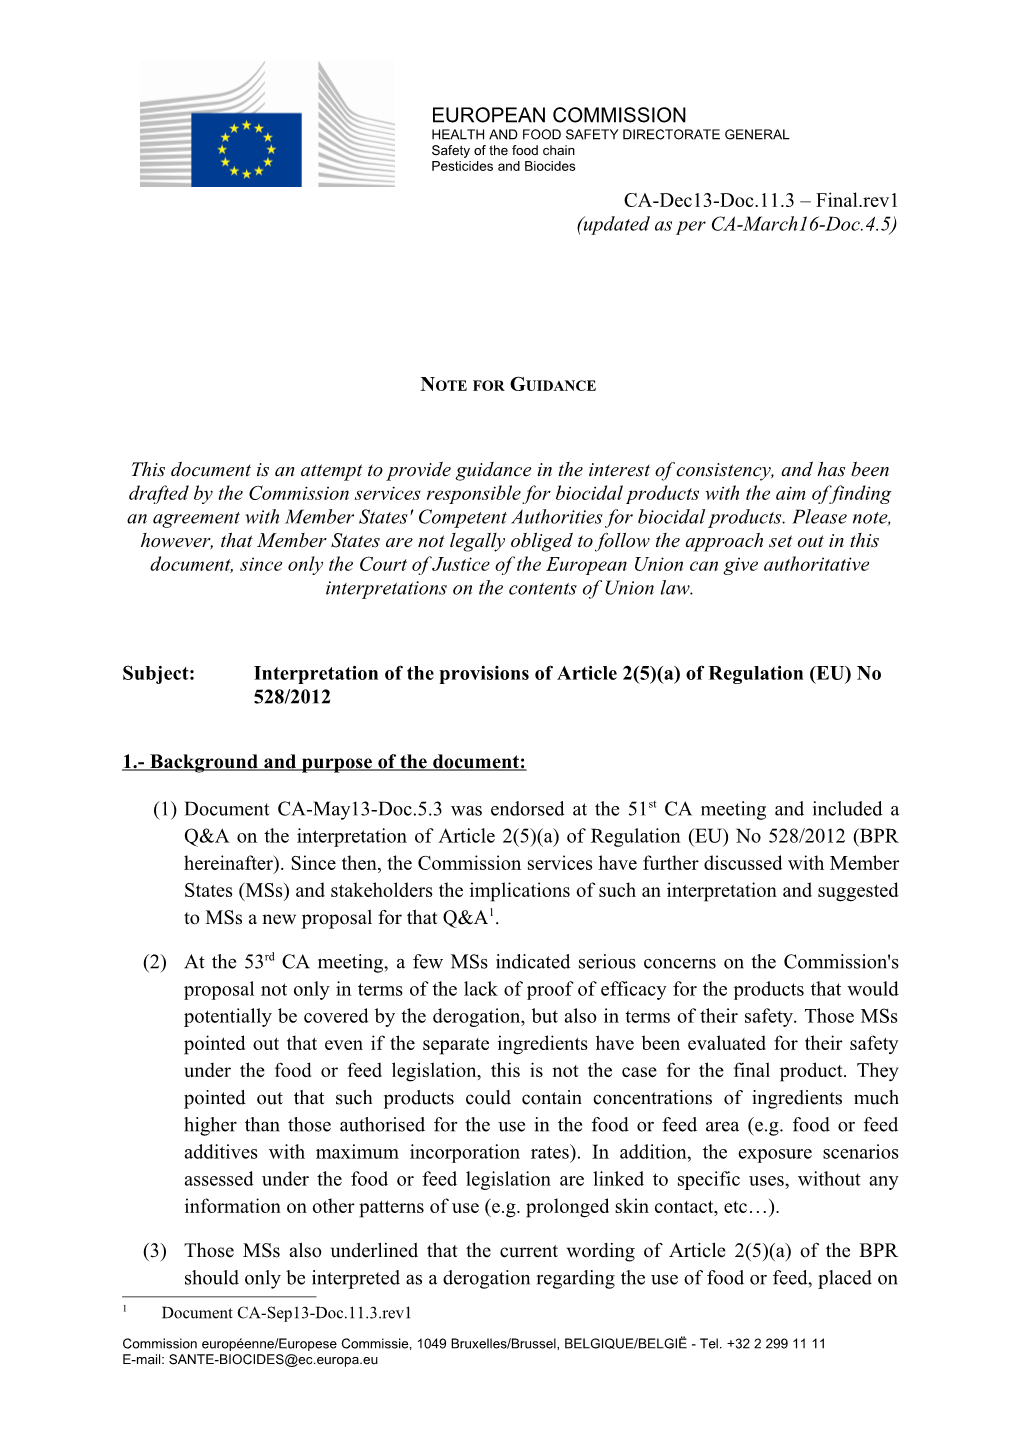 Subject:Interpretation of the Provisions of Article 2(5)(A) of Regulation (EU) No 528/2012